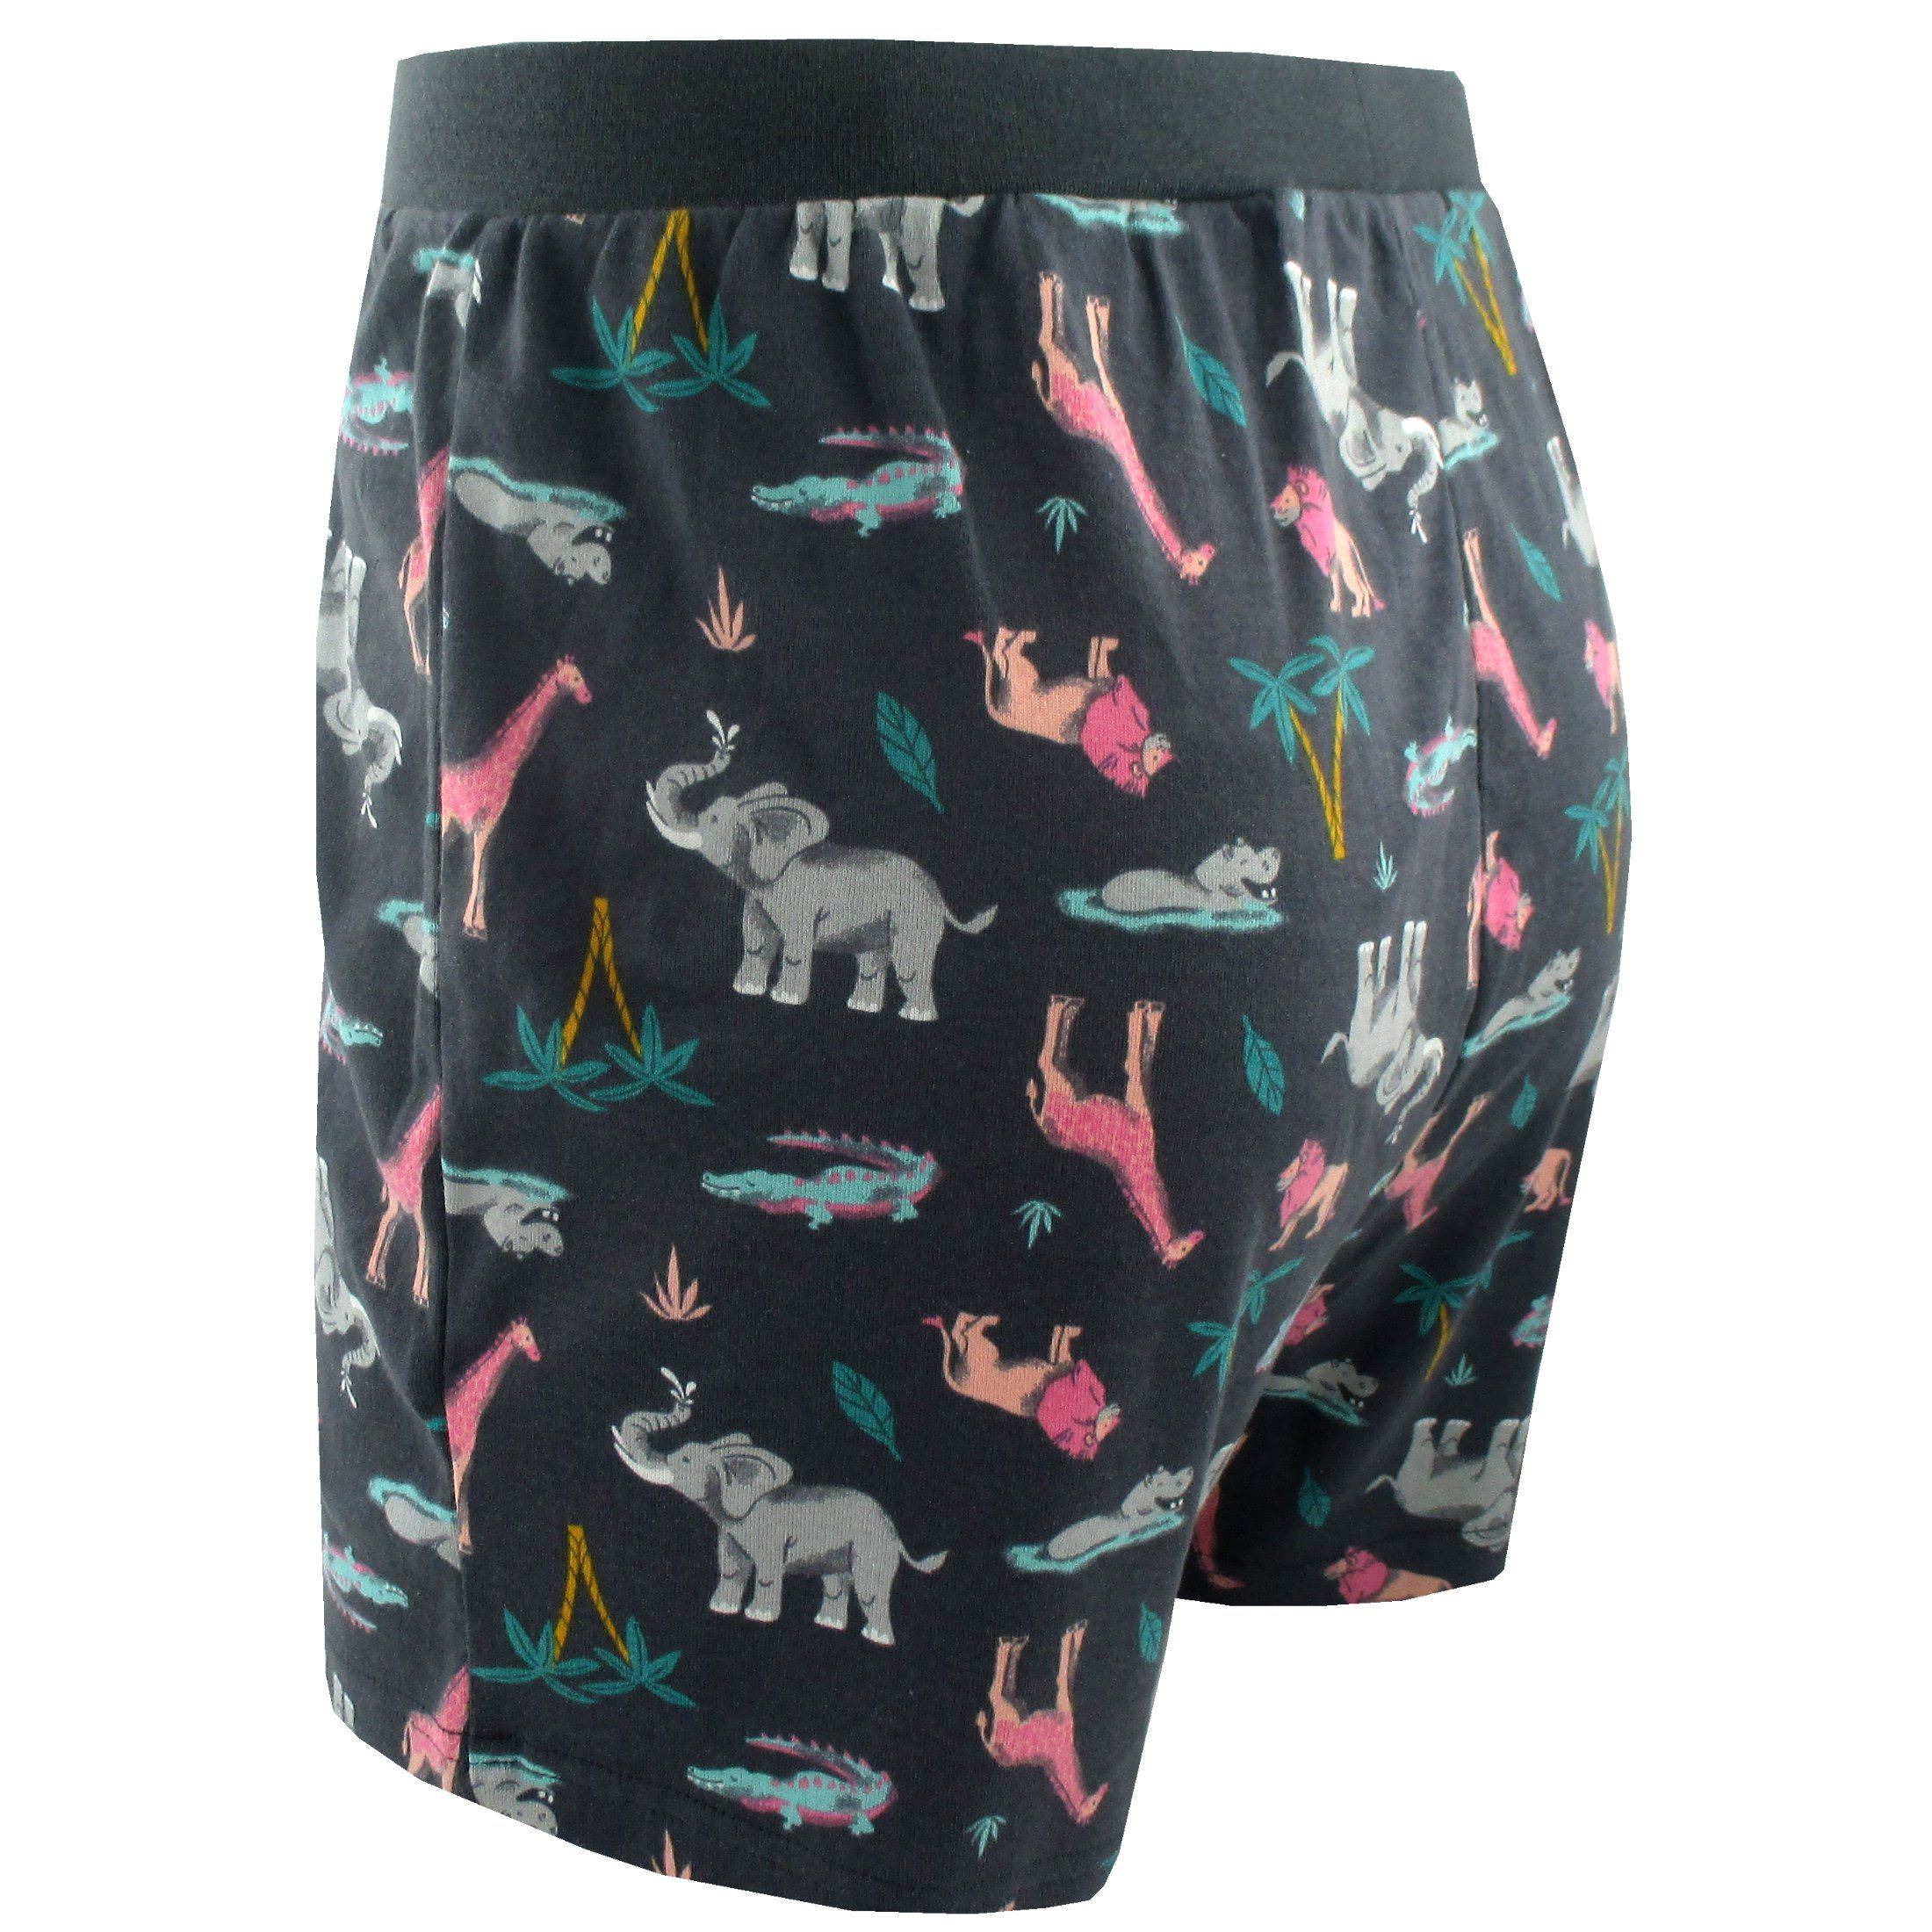 Super Soft and Comfy Cotton Jersey Stretch Knit Boxer Shorts Underwear For Men in Savanna Safari Animal Prints